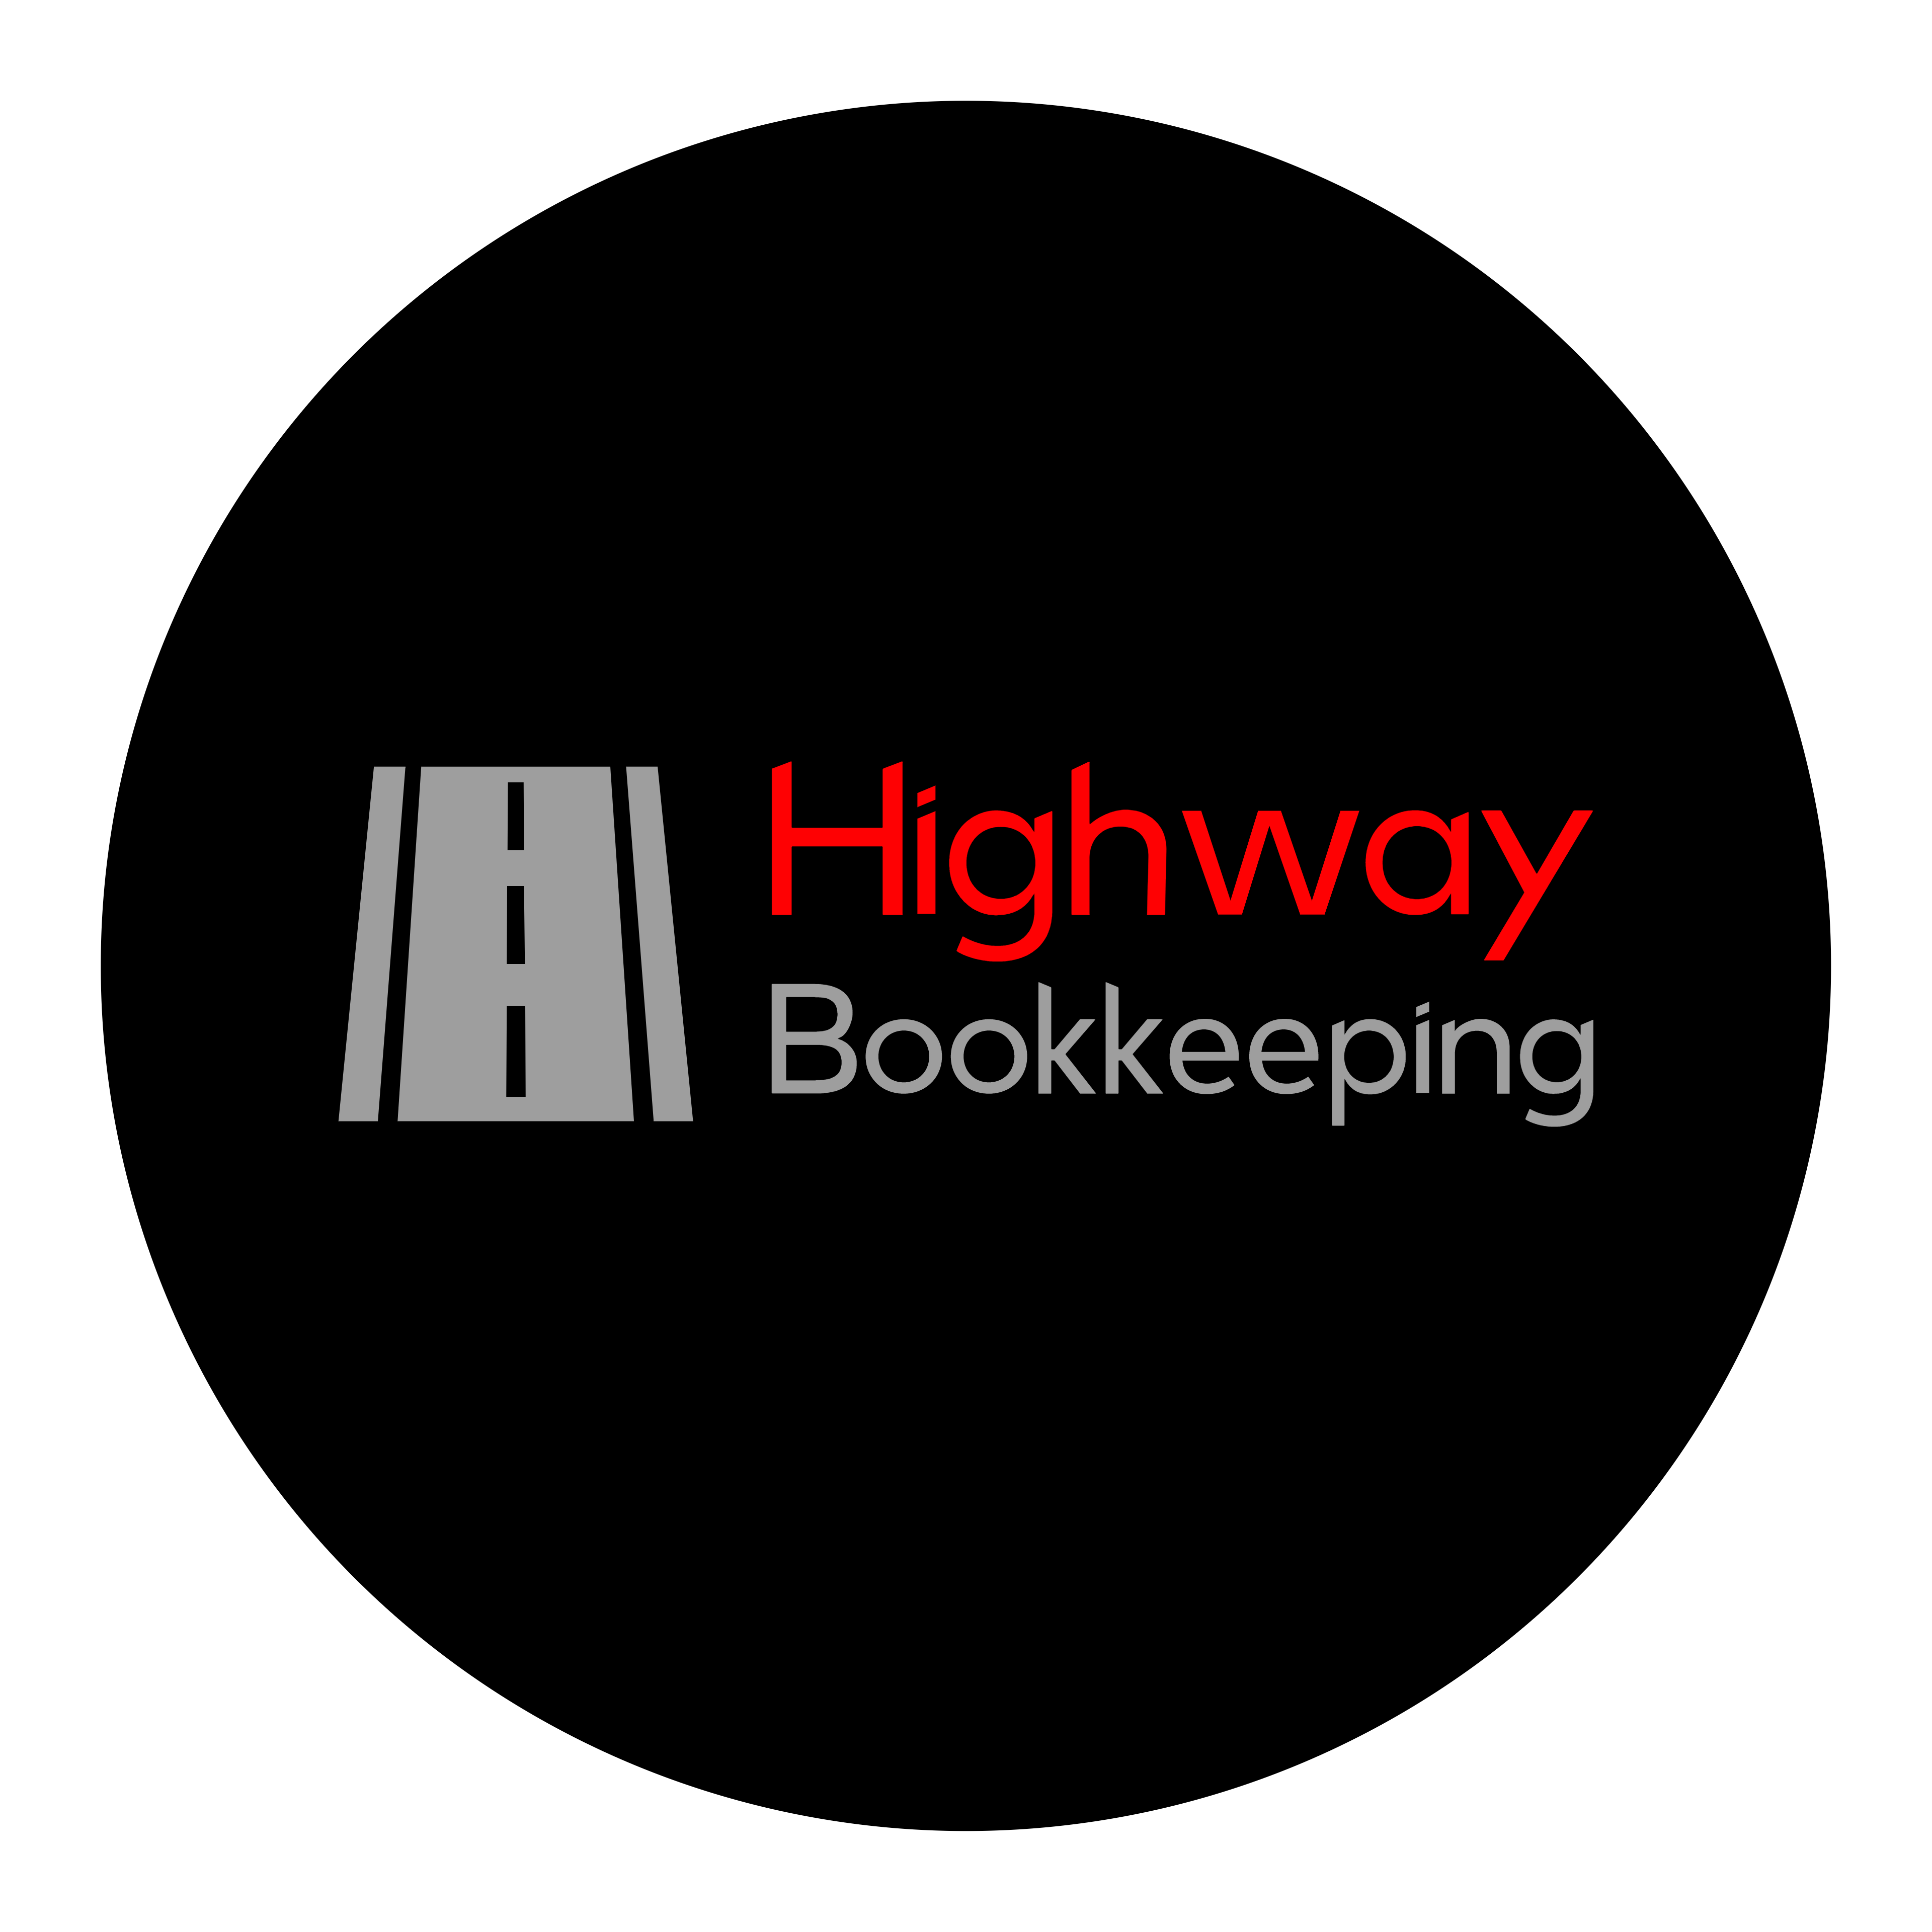 Highway Bookkeeping